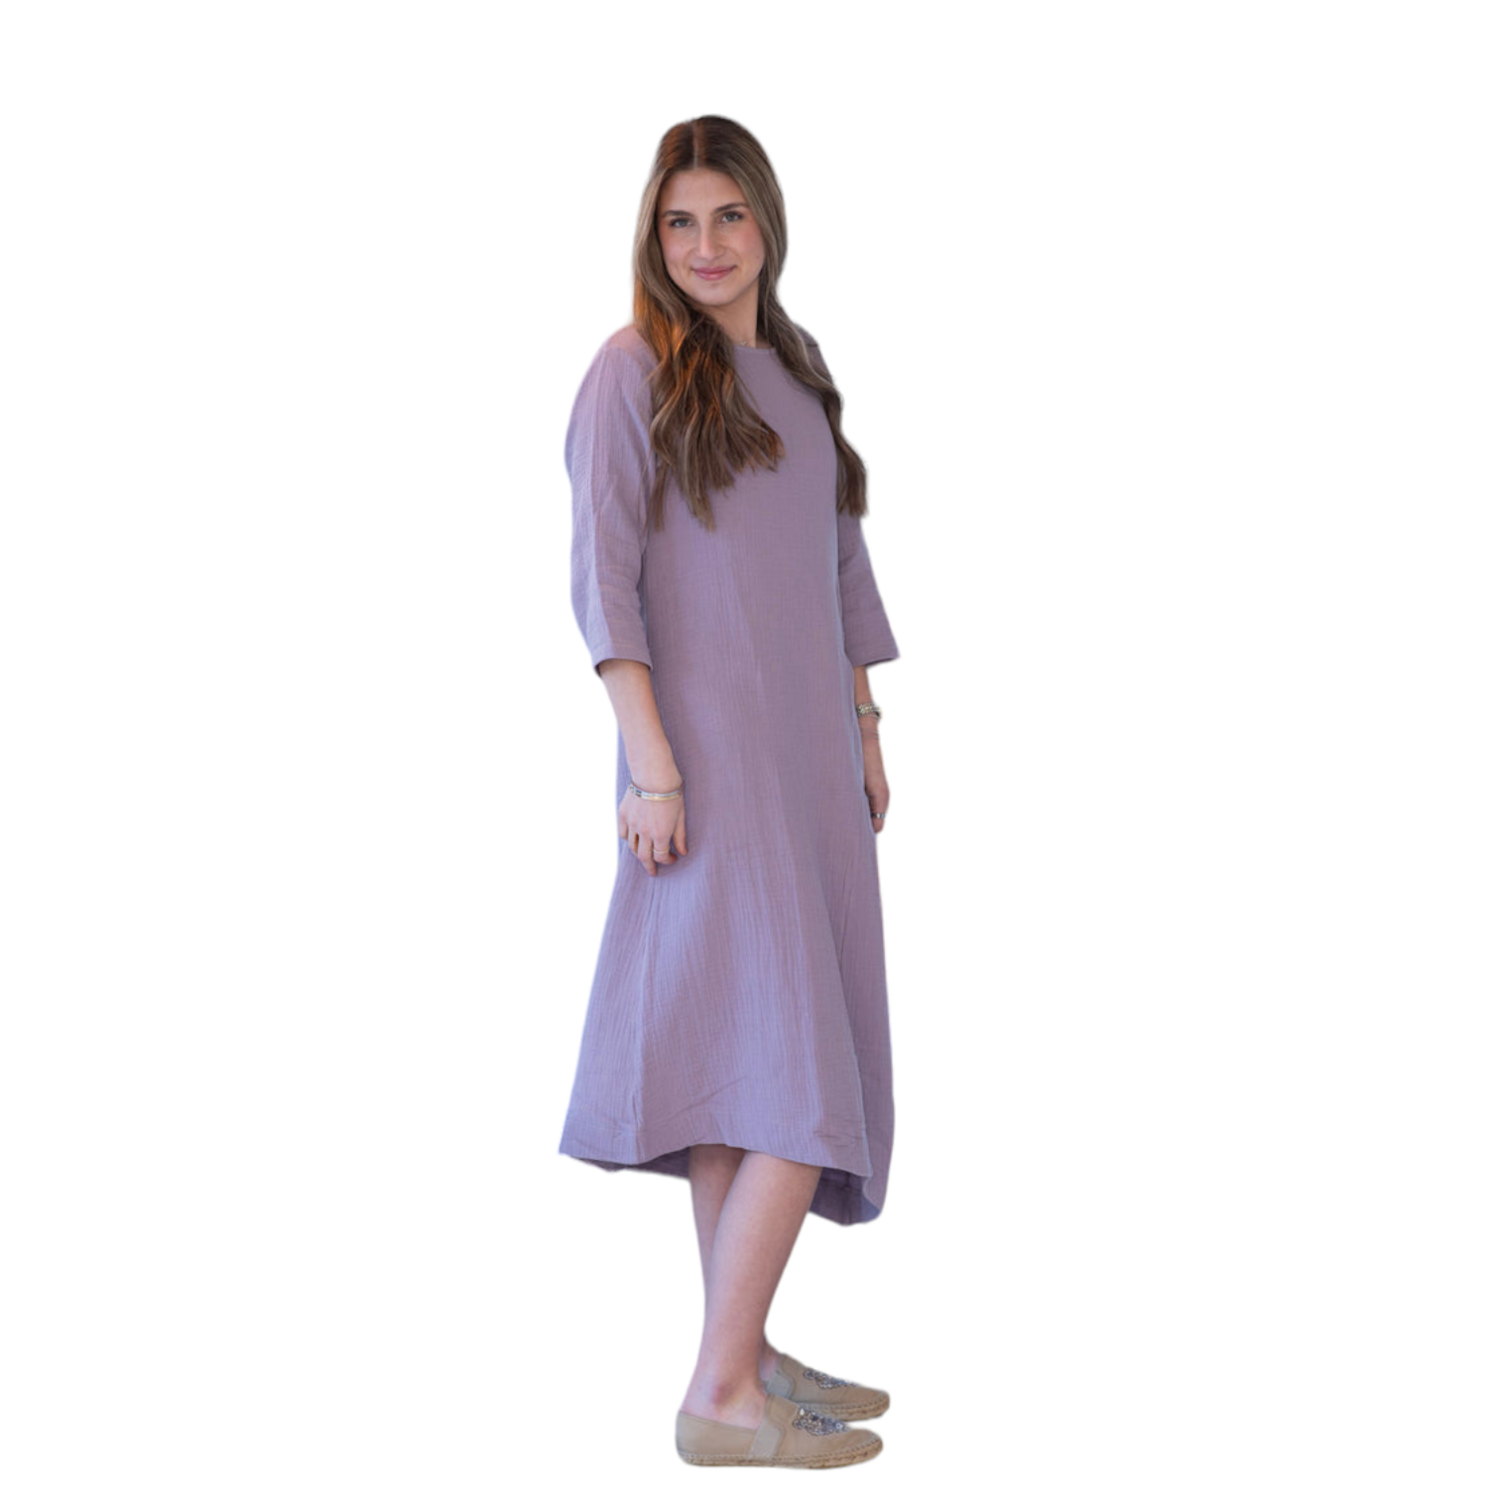 Super lightweight cotton dress - Lilac, Size: S